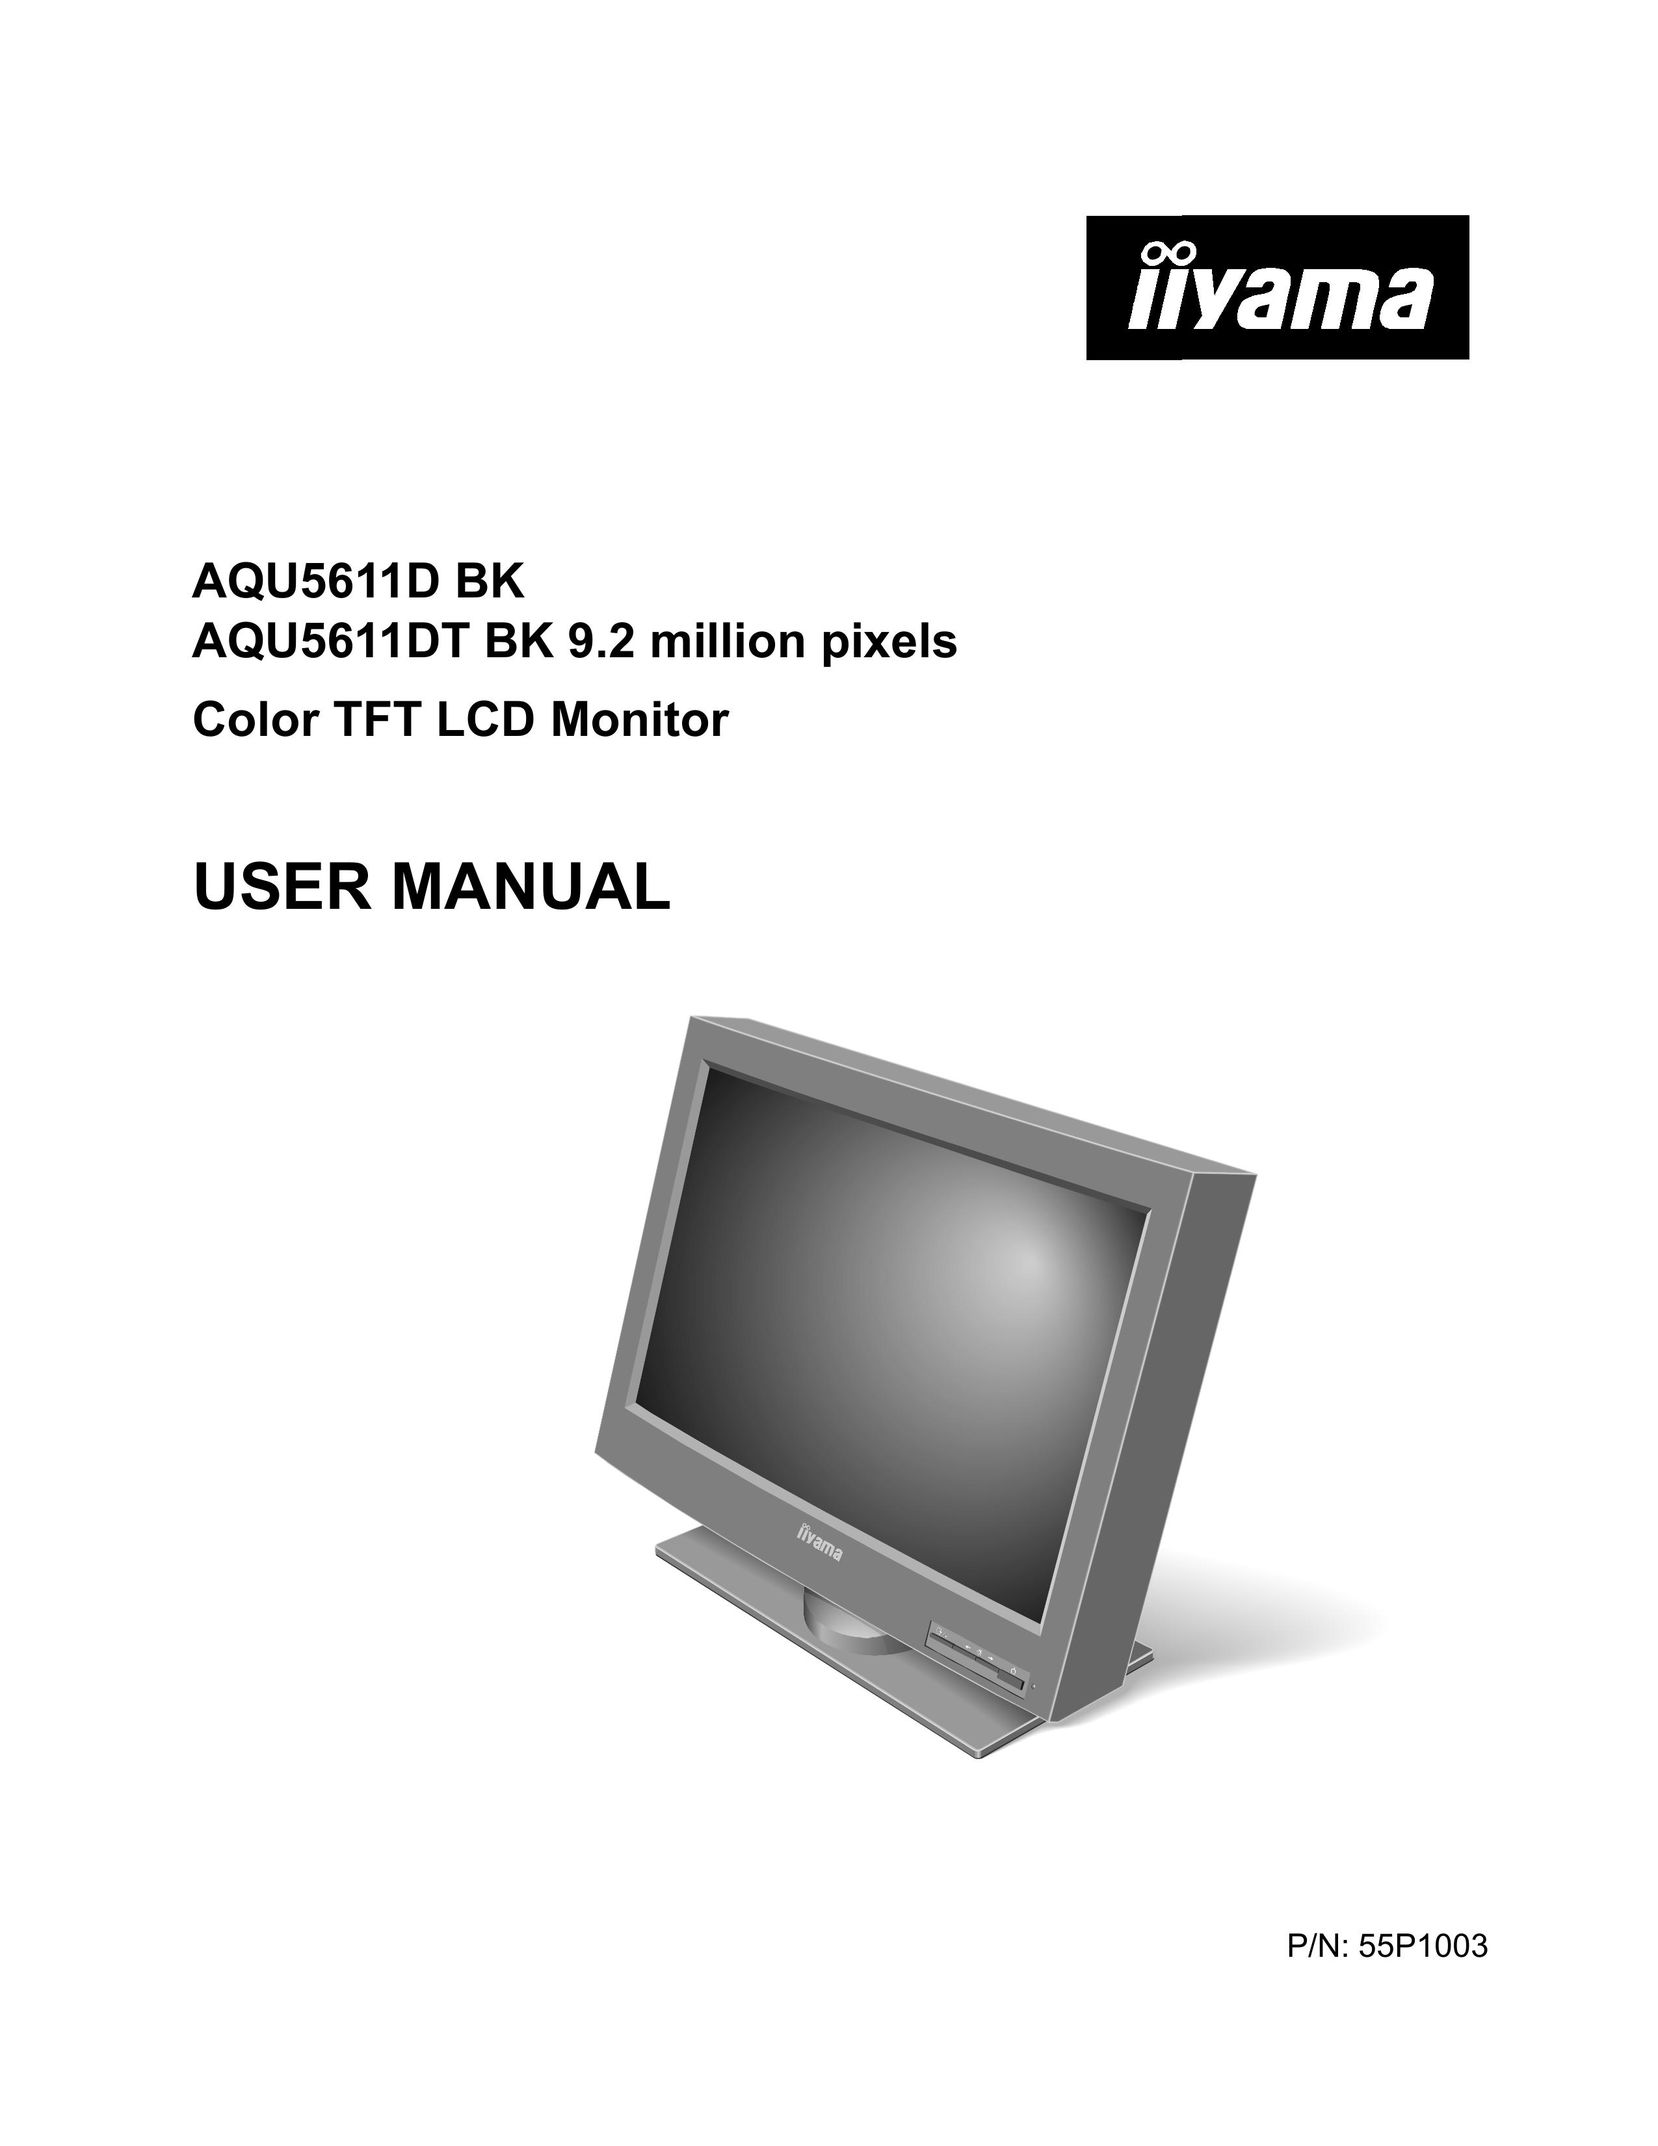 Iiyama AQU5611D BK Computer Monitor User Manual